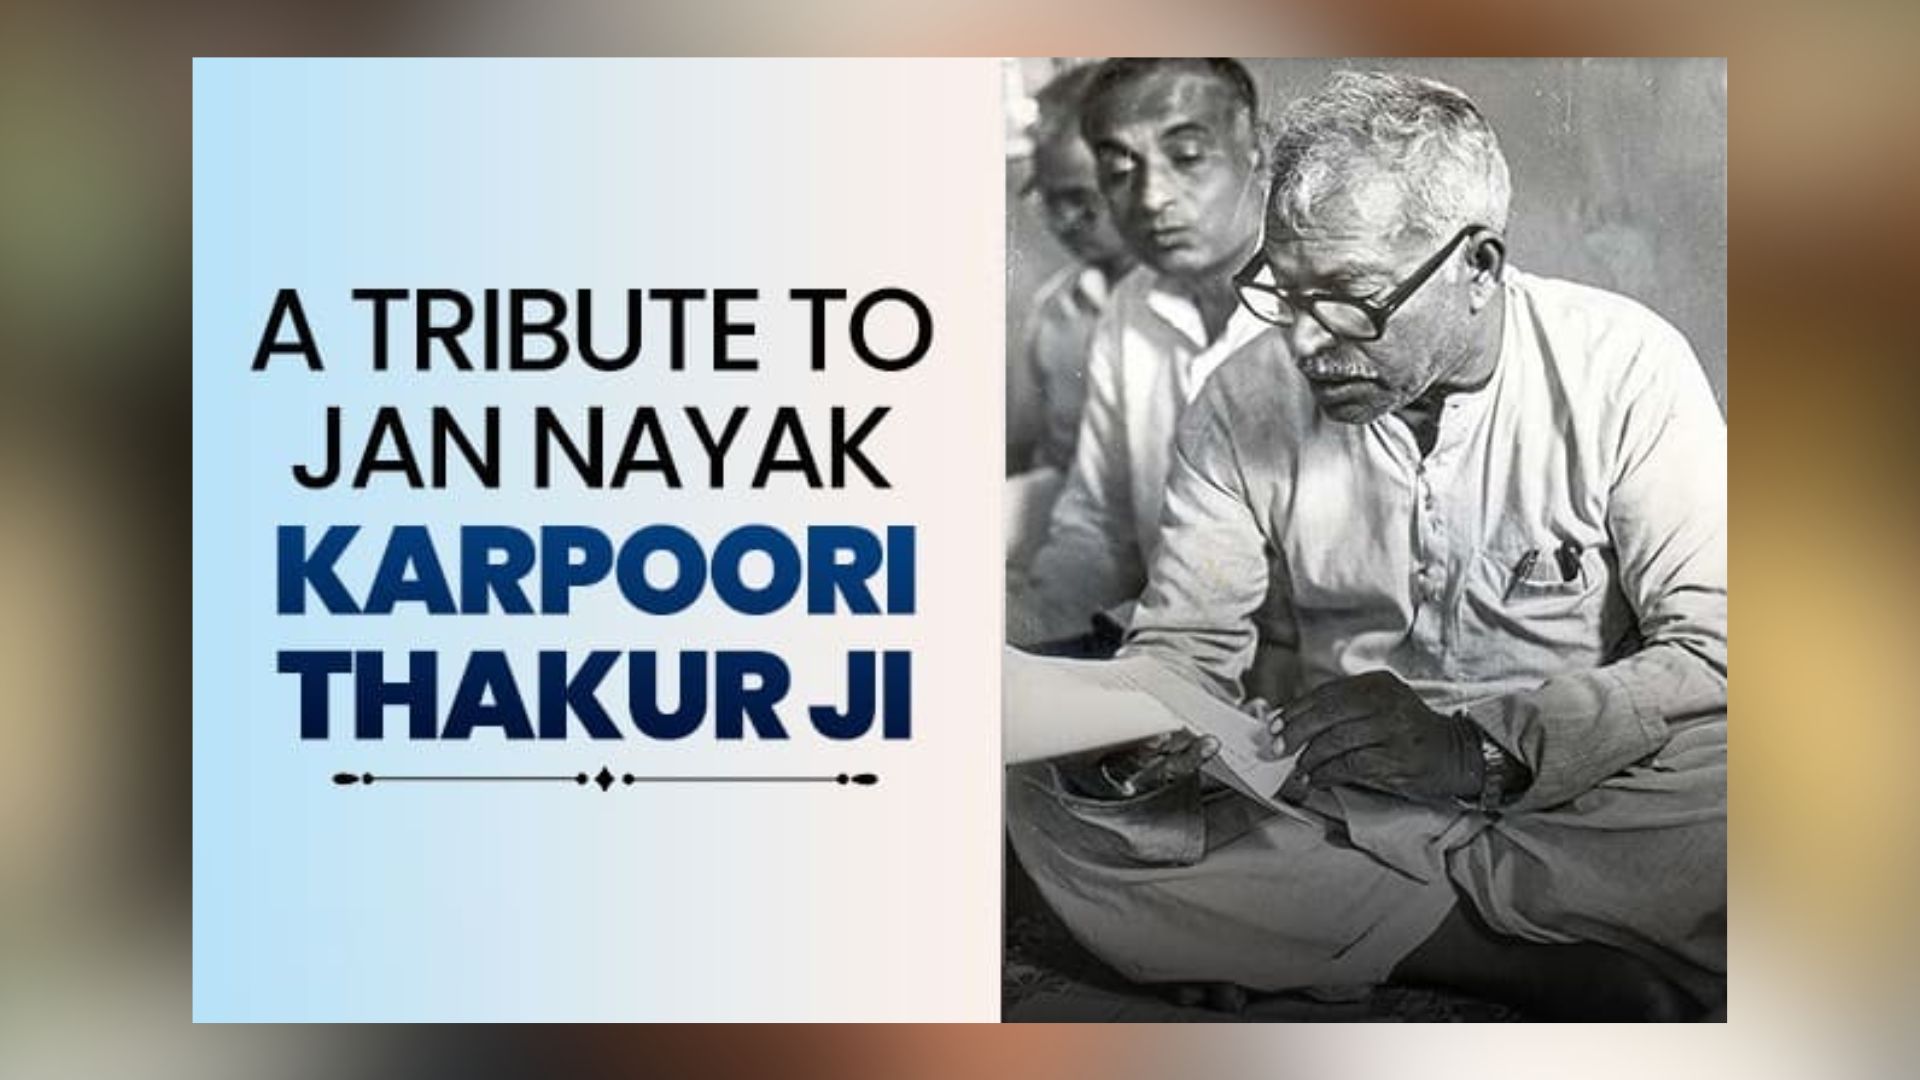 “I Have Much To Thank Him For”: PM Modi Praises Karpoori Thakur